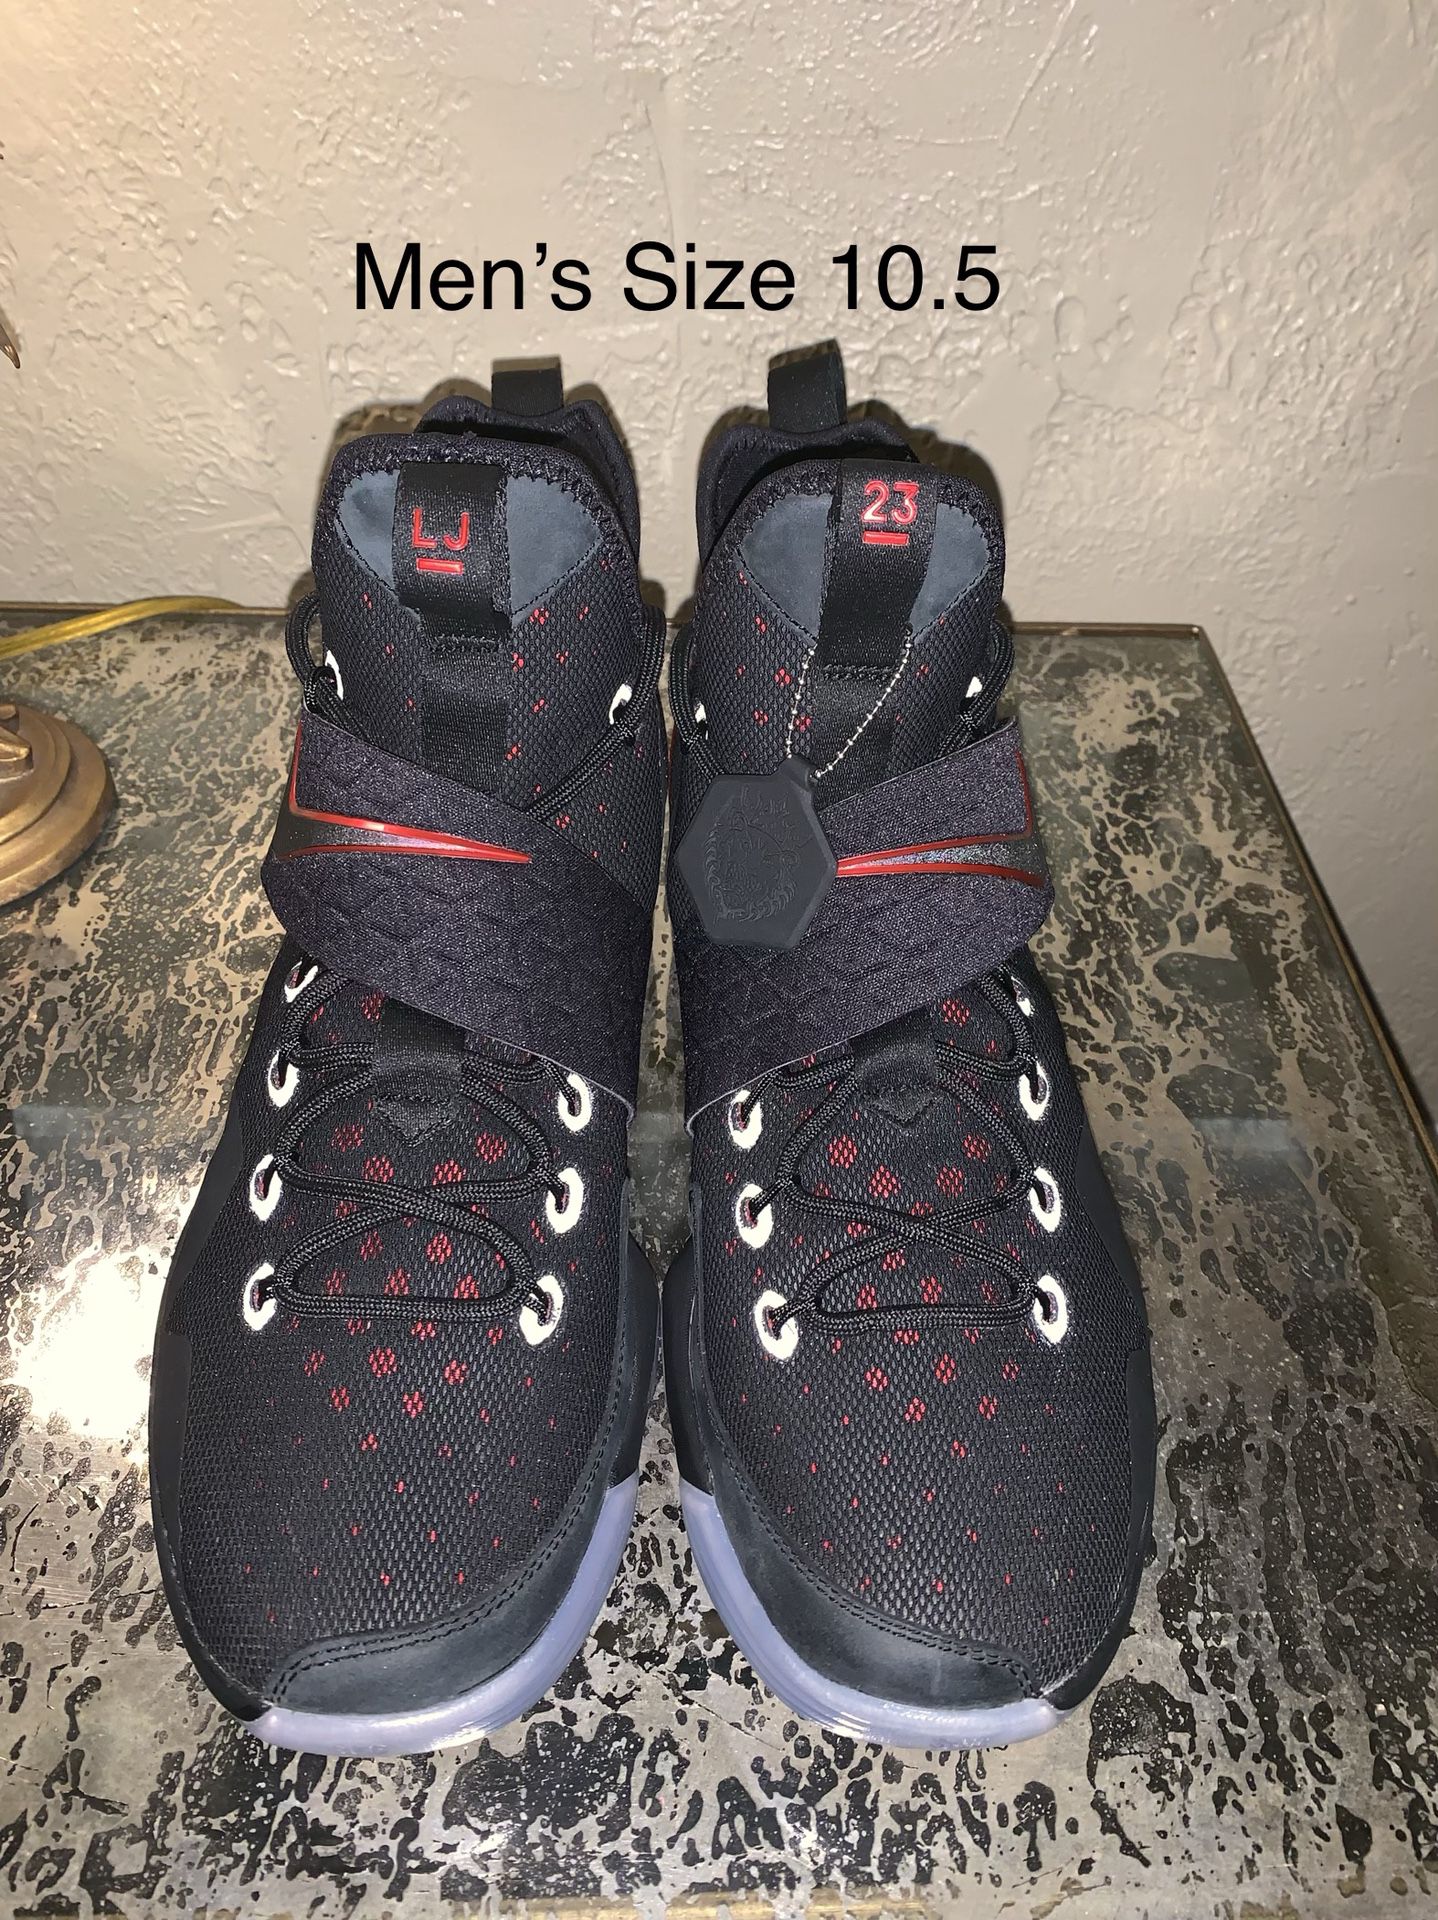 Nike LeBron XIV “Bred” Men’s Basketball Shoes